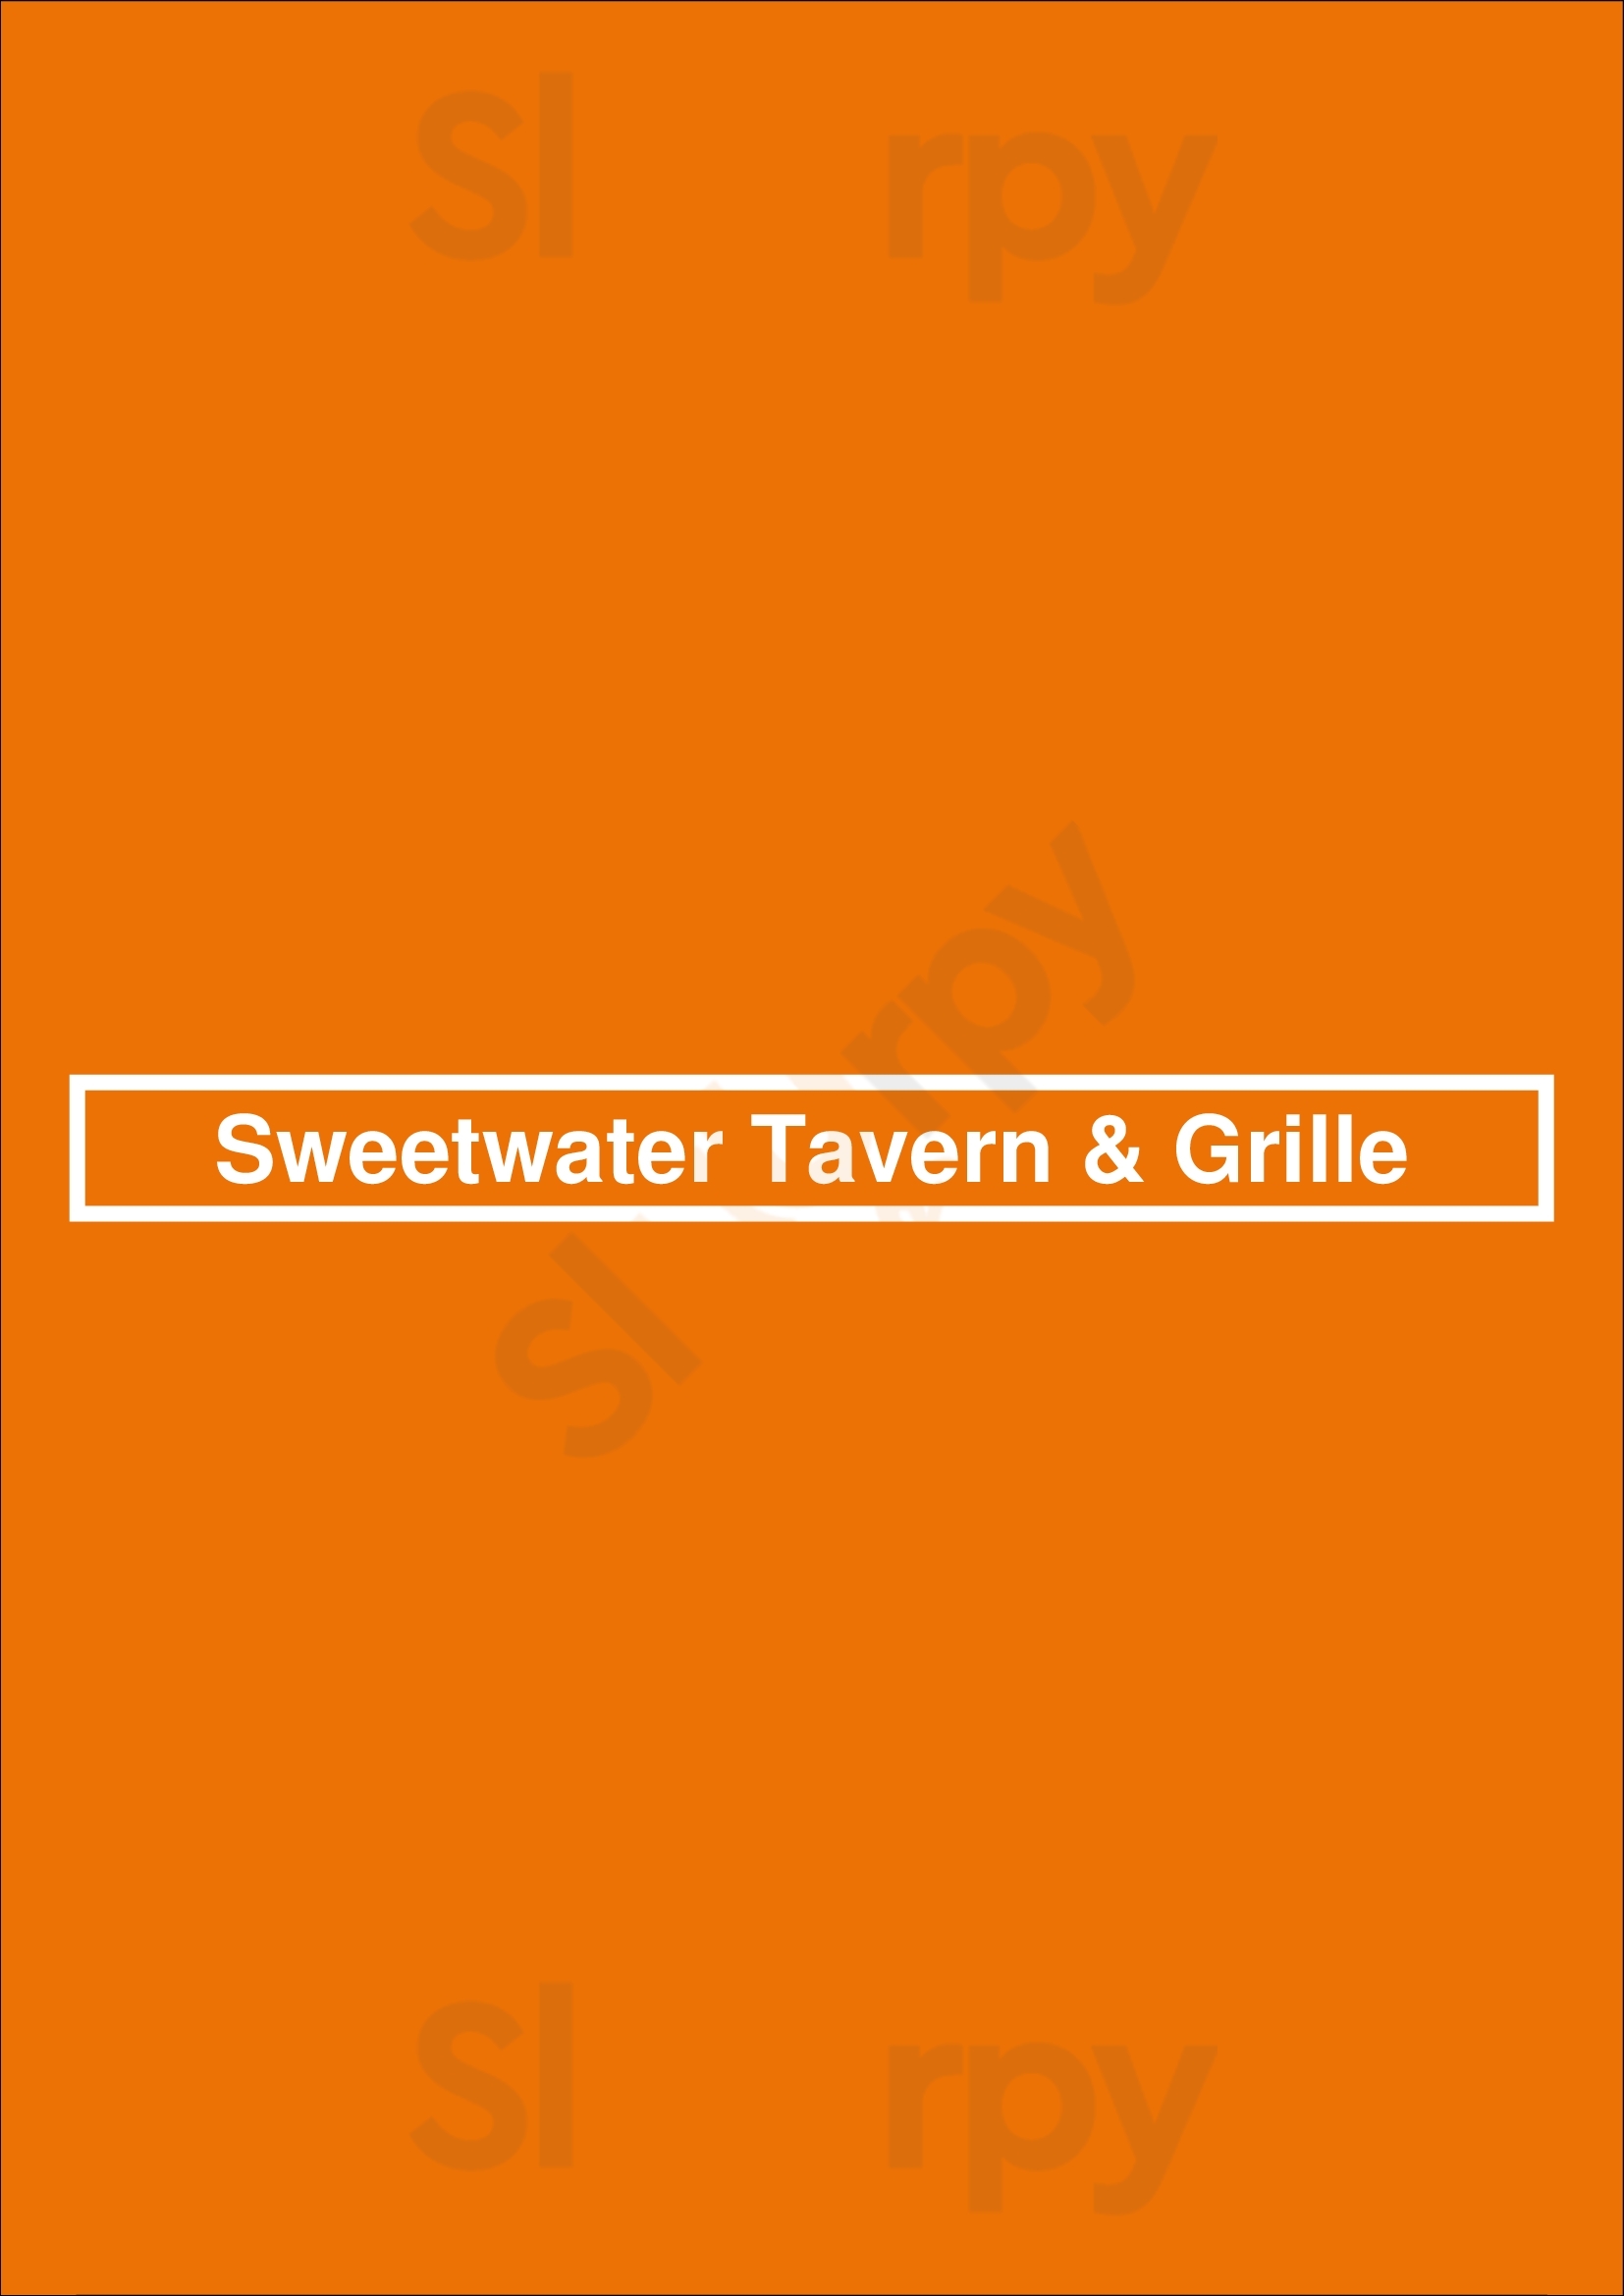 Sweetwater Tavern & Grille (michigan Plaza - Chicago) Chicago Menu - 1